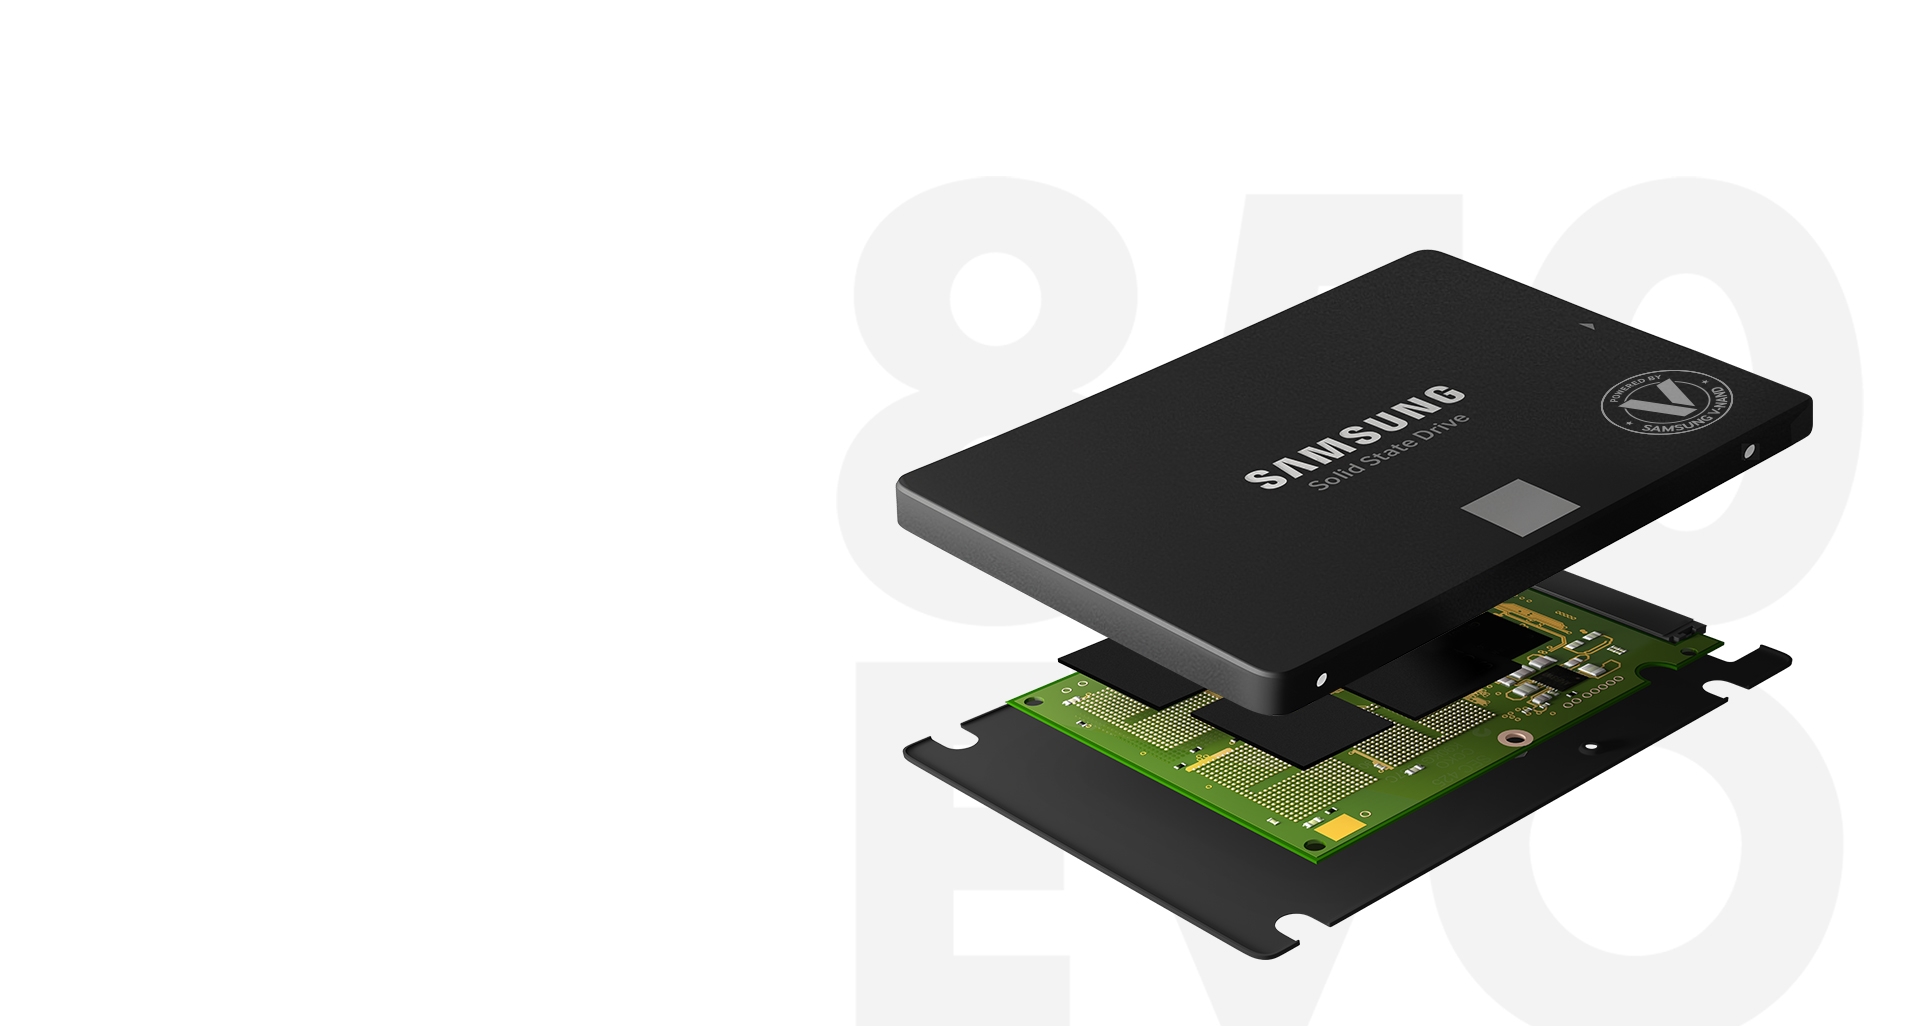 EVO 2.5" SATA III 250GB Memory Storage - MZ-75E250B/AM Samsung US